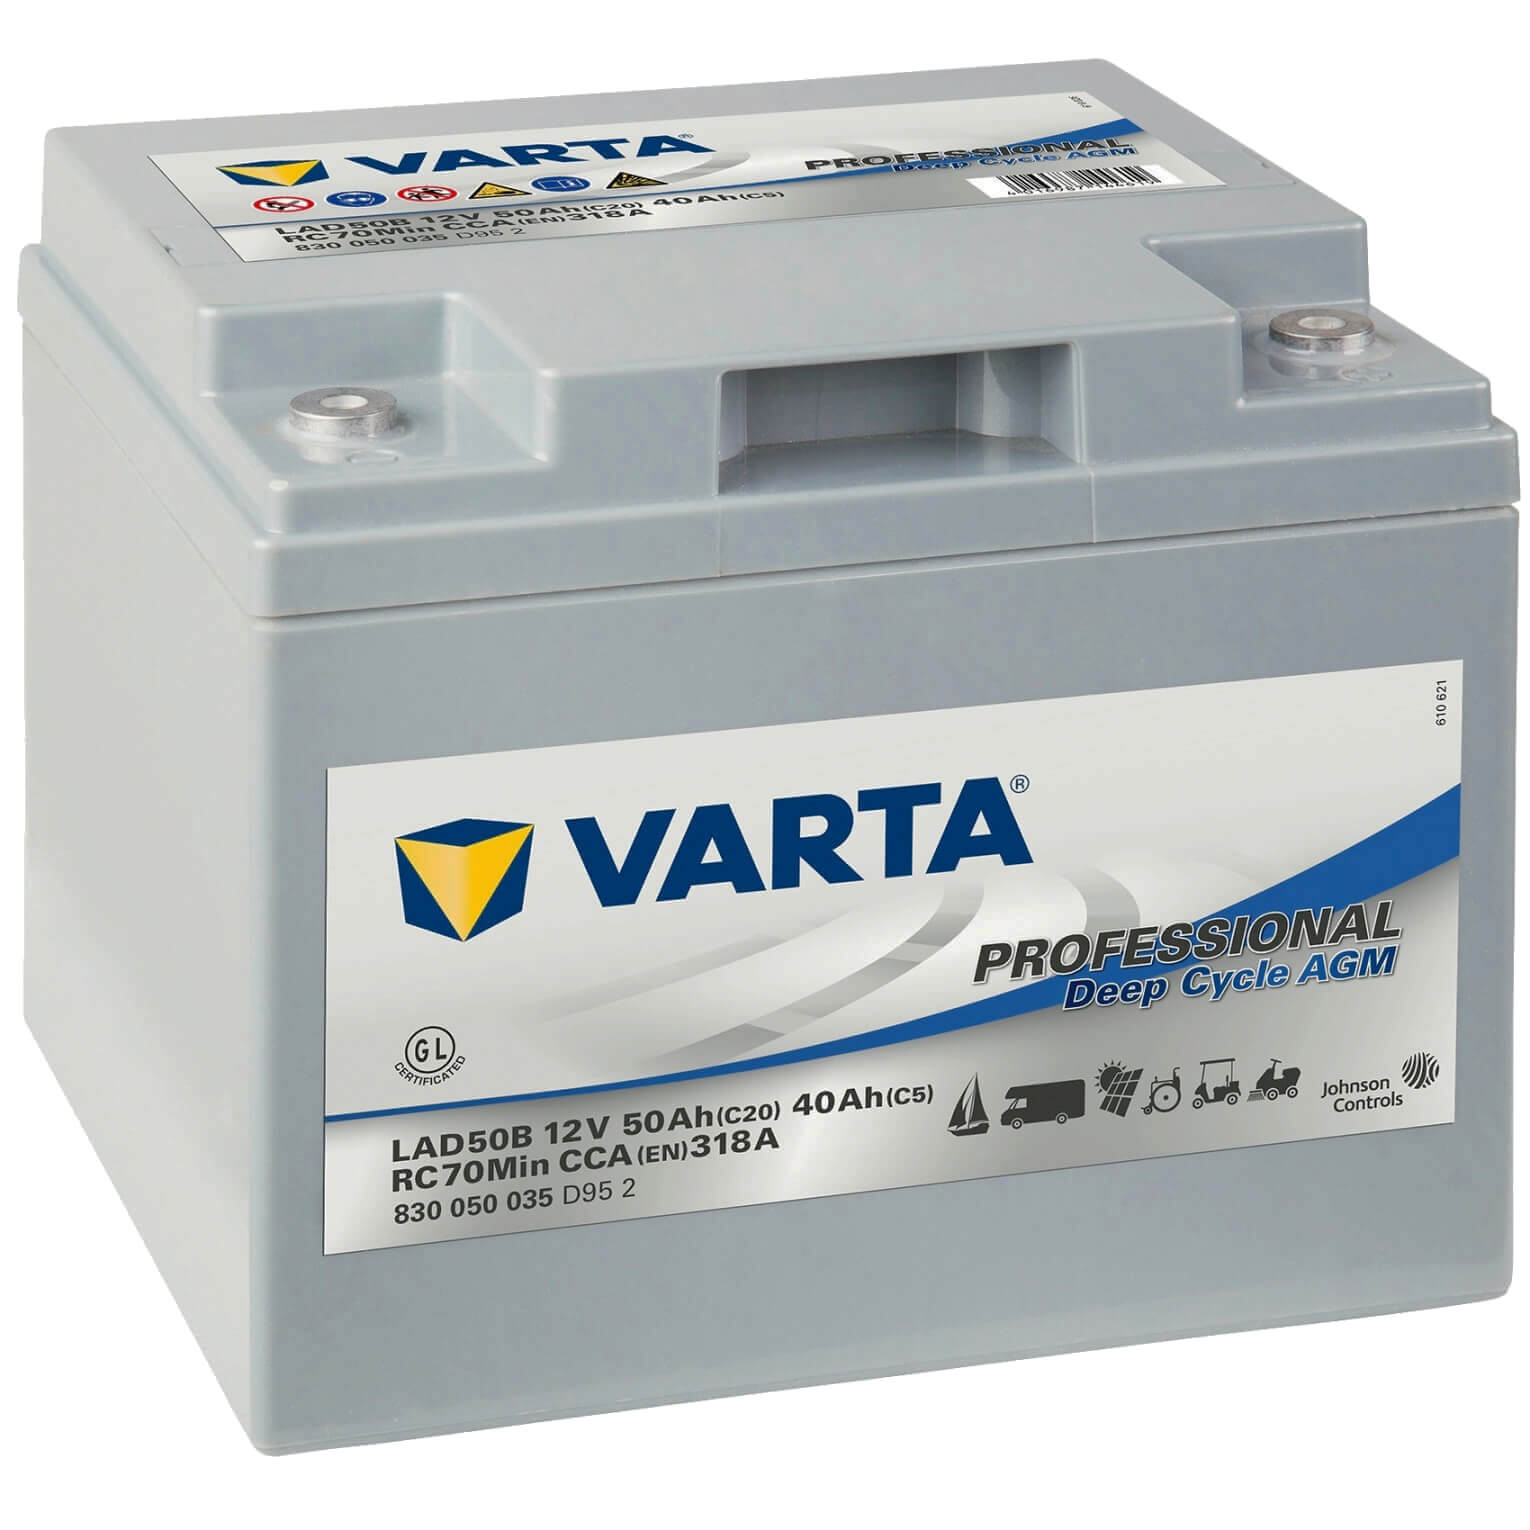 http://www.batterie-industrie-germany.de/cdn/shop/files/Versorgerbatterie-Varta-Professional-Deep-Cycle-AGM-LAD50B-12V-50Ah-830050035D952-Seite-links.jpg?v=1700815779